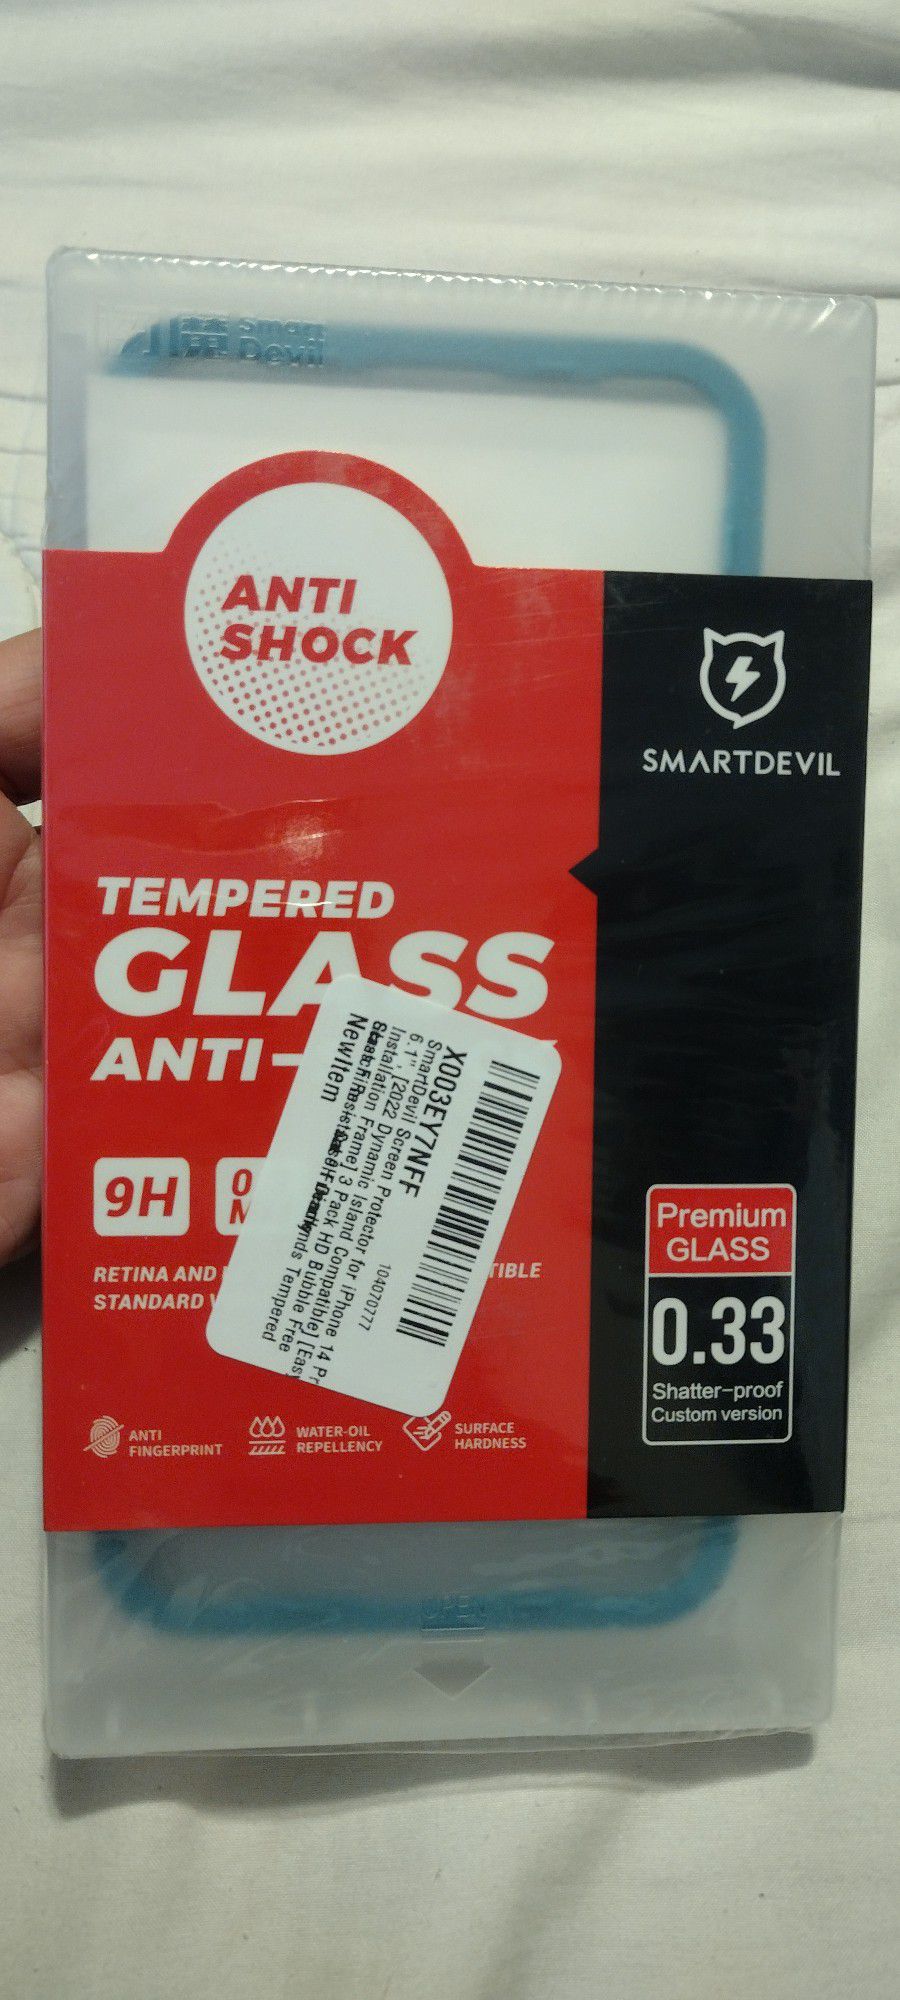 TEMPERED GLASS ANTI-SHOCK